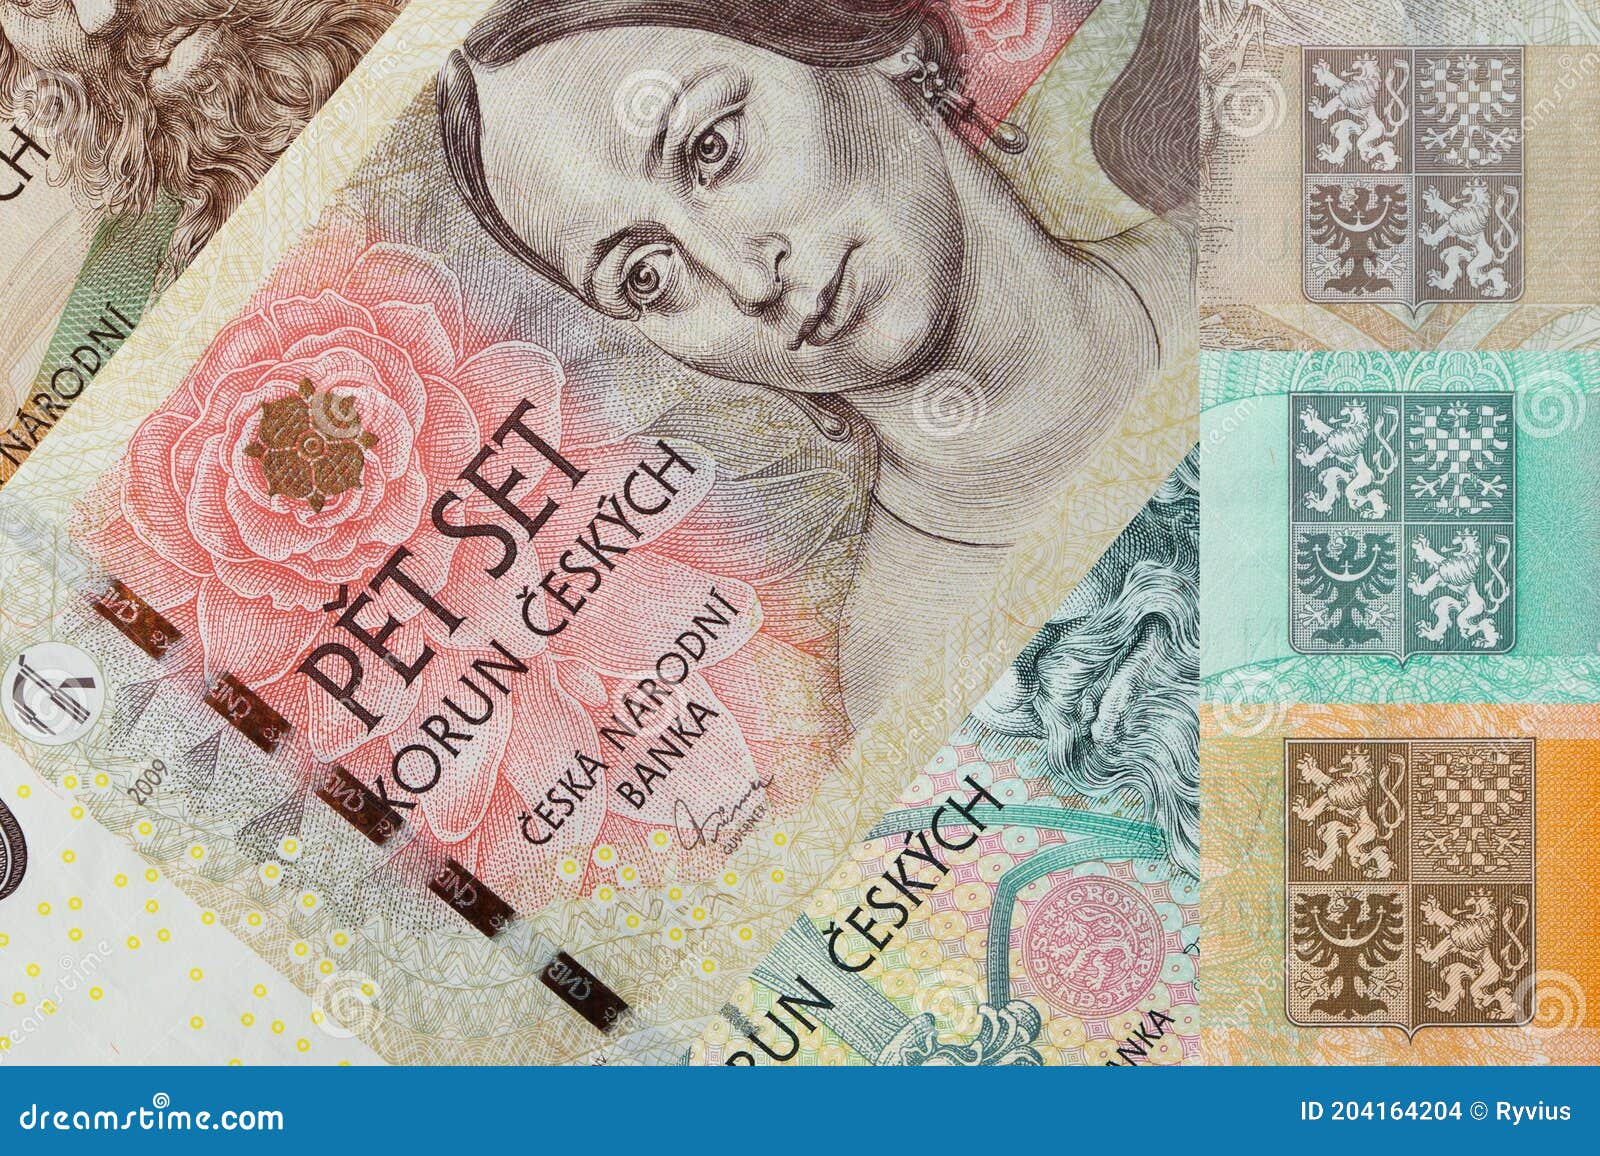 Czech Koruna Notes, Czech Republic Stock Image - Image of cash, banknotes: 108365161